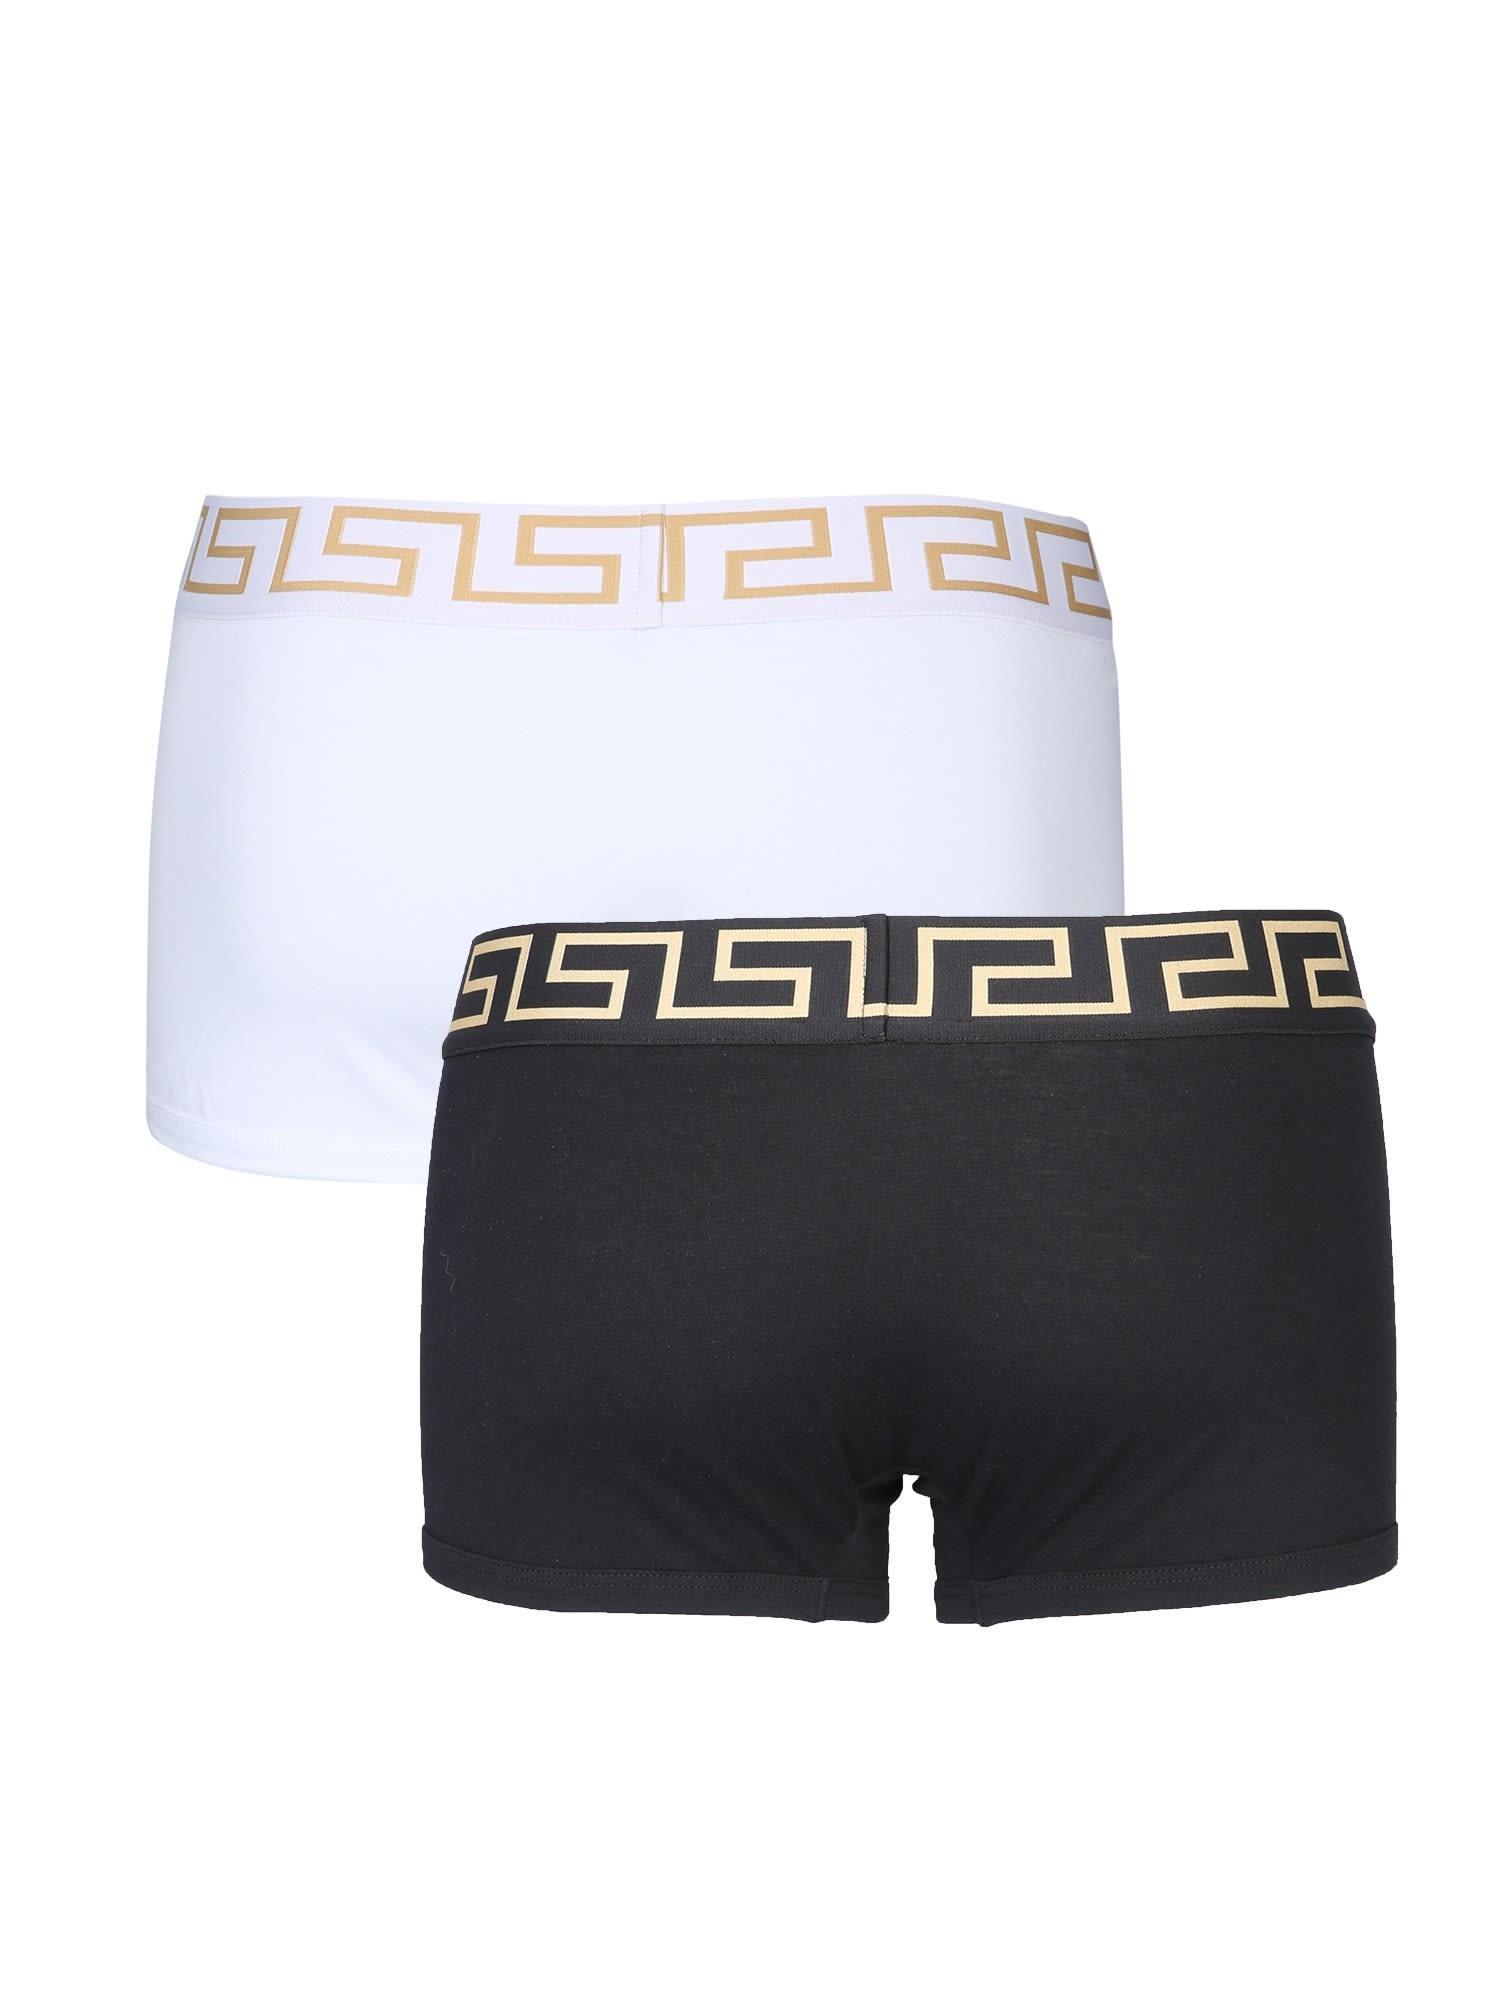 Versace, Intimates & Sleepwear, Versace Greca Border Thong Size 2